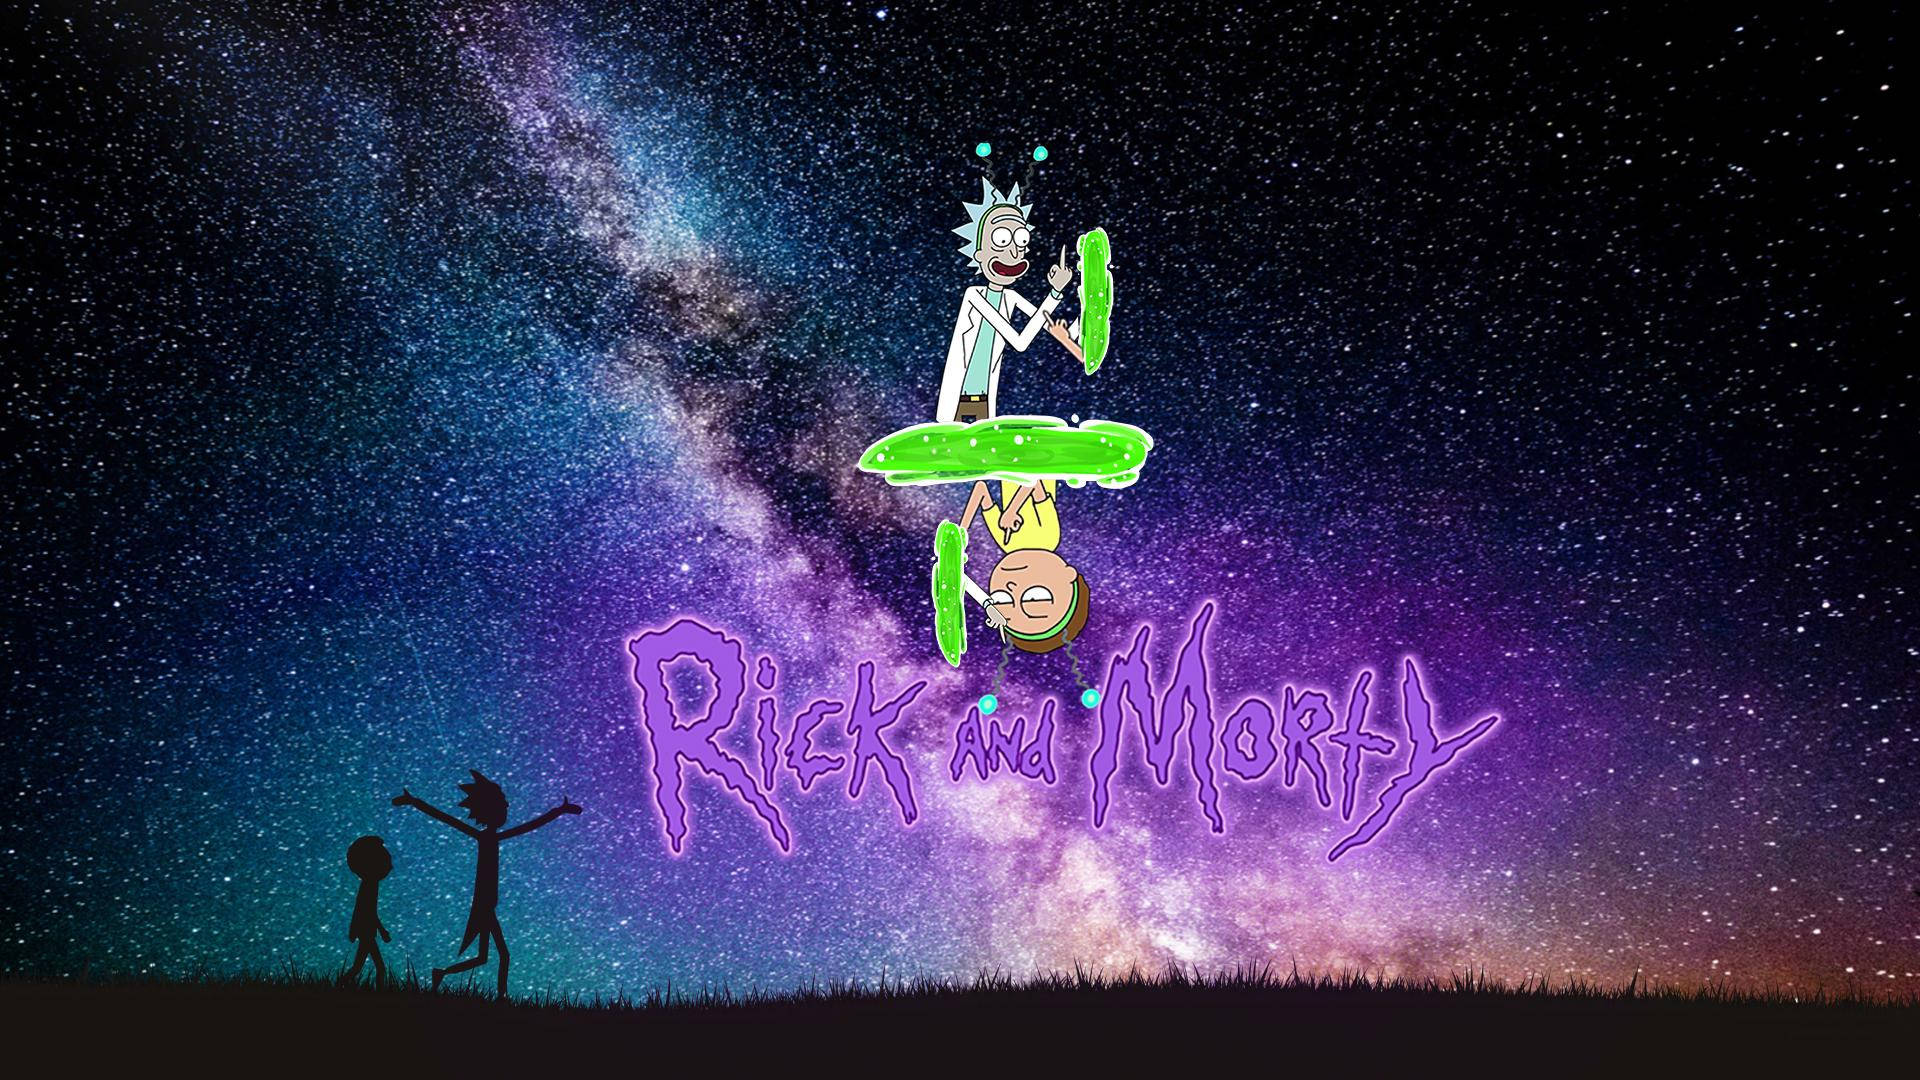 Rick and Morty having fun with interdimensional portals Wallpaper